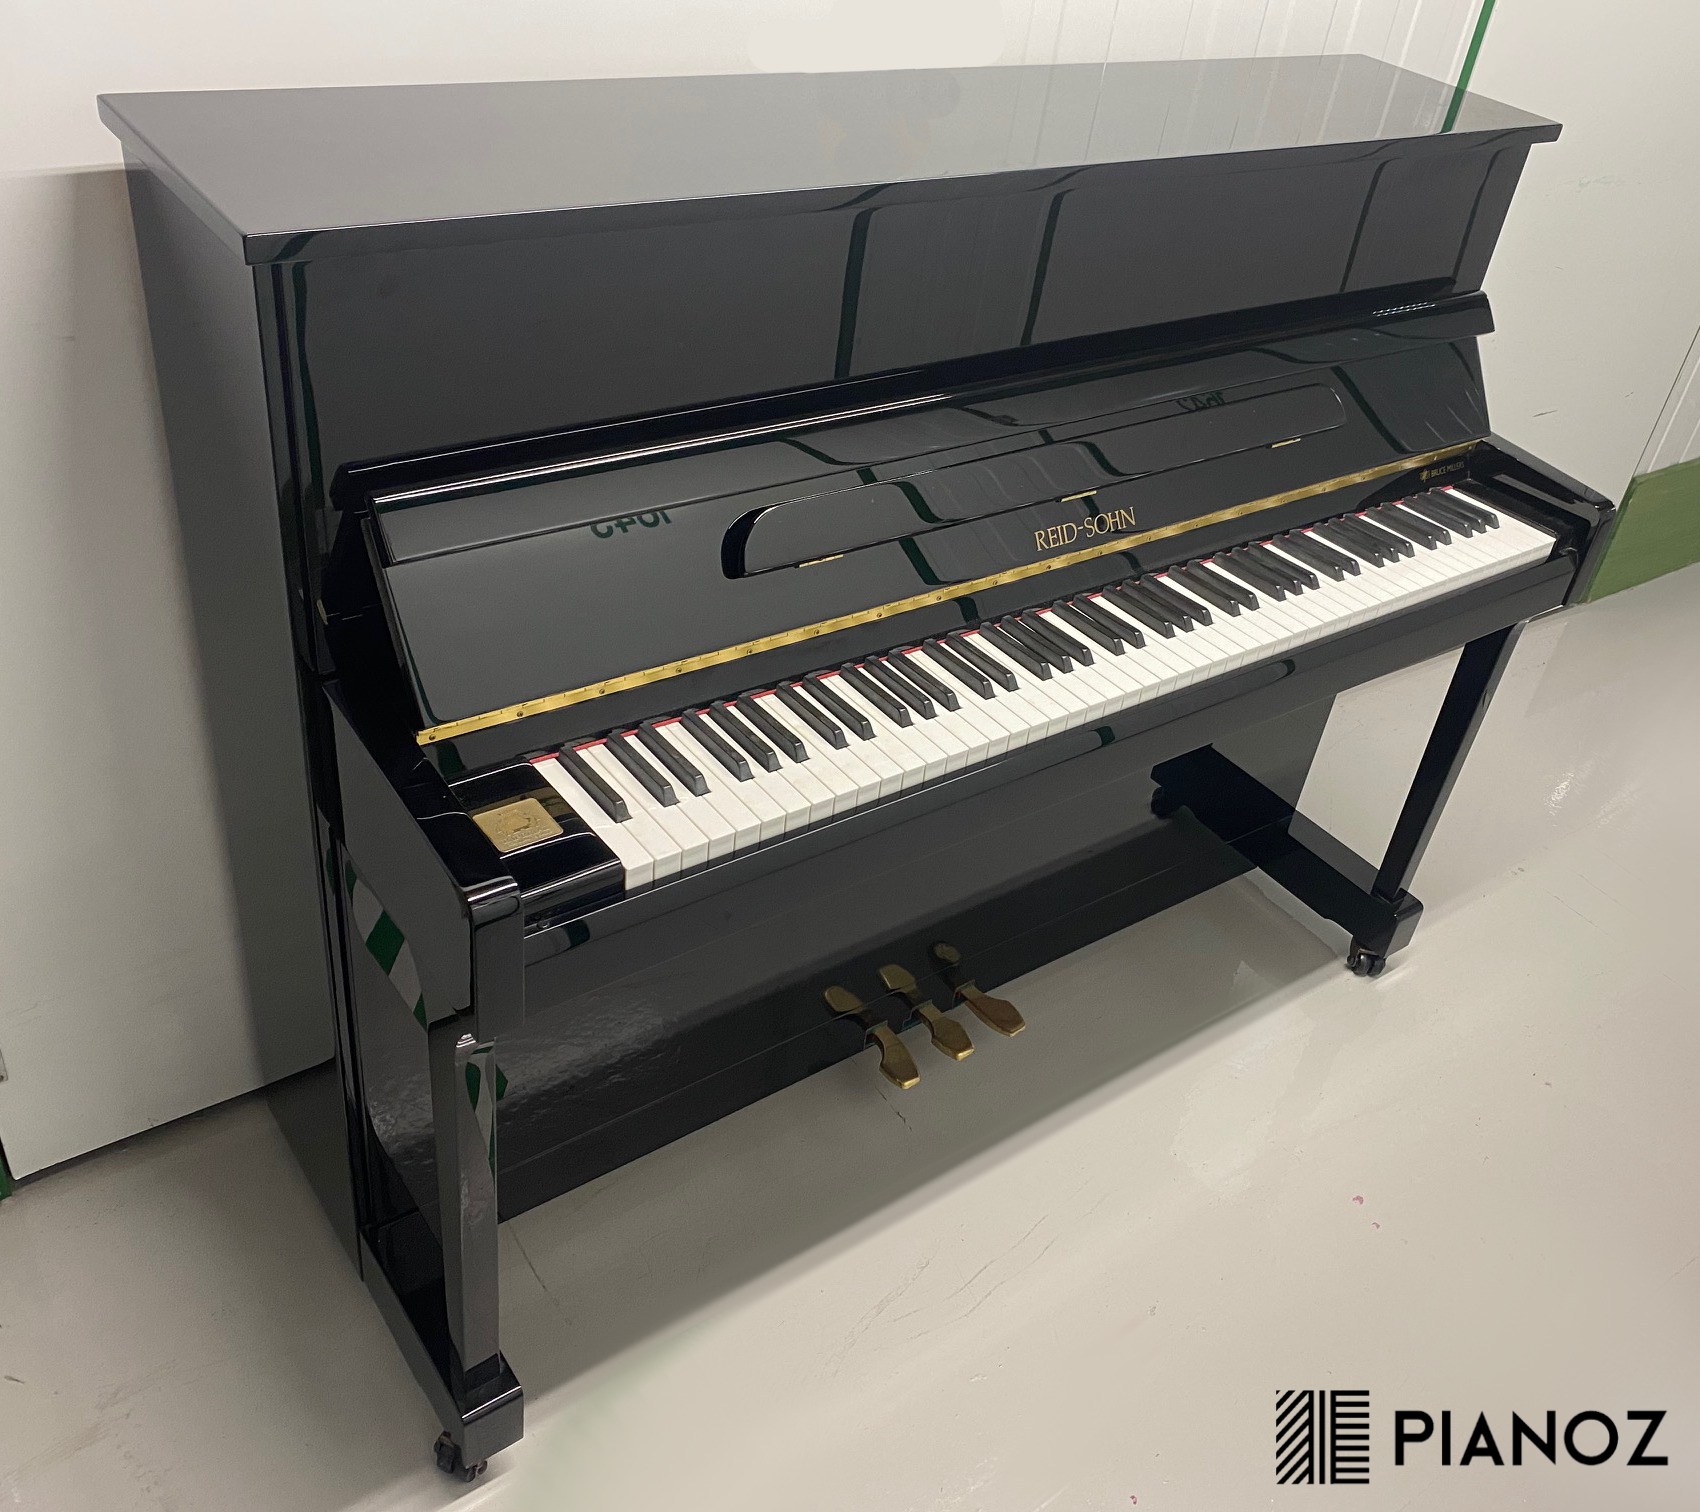 Reid Sohn 115 Black Gloss Upright Piano piano for sale in UK